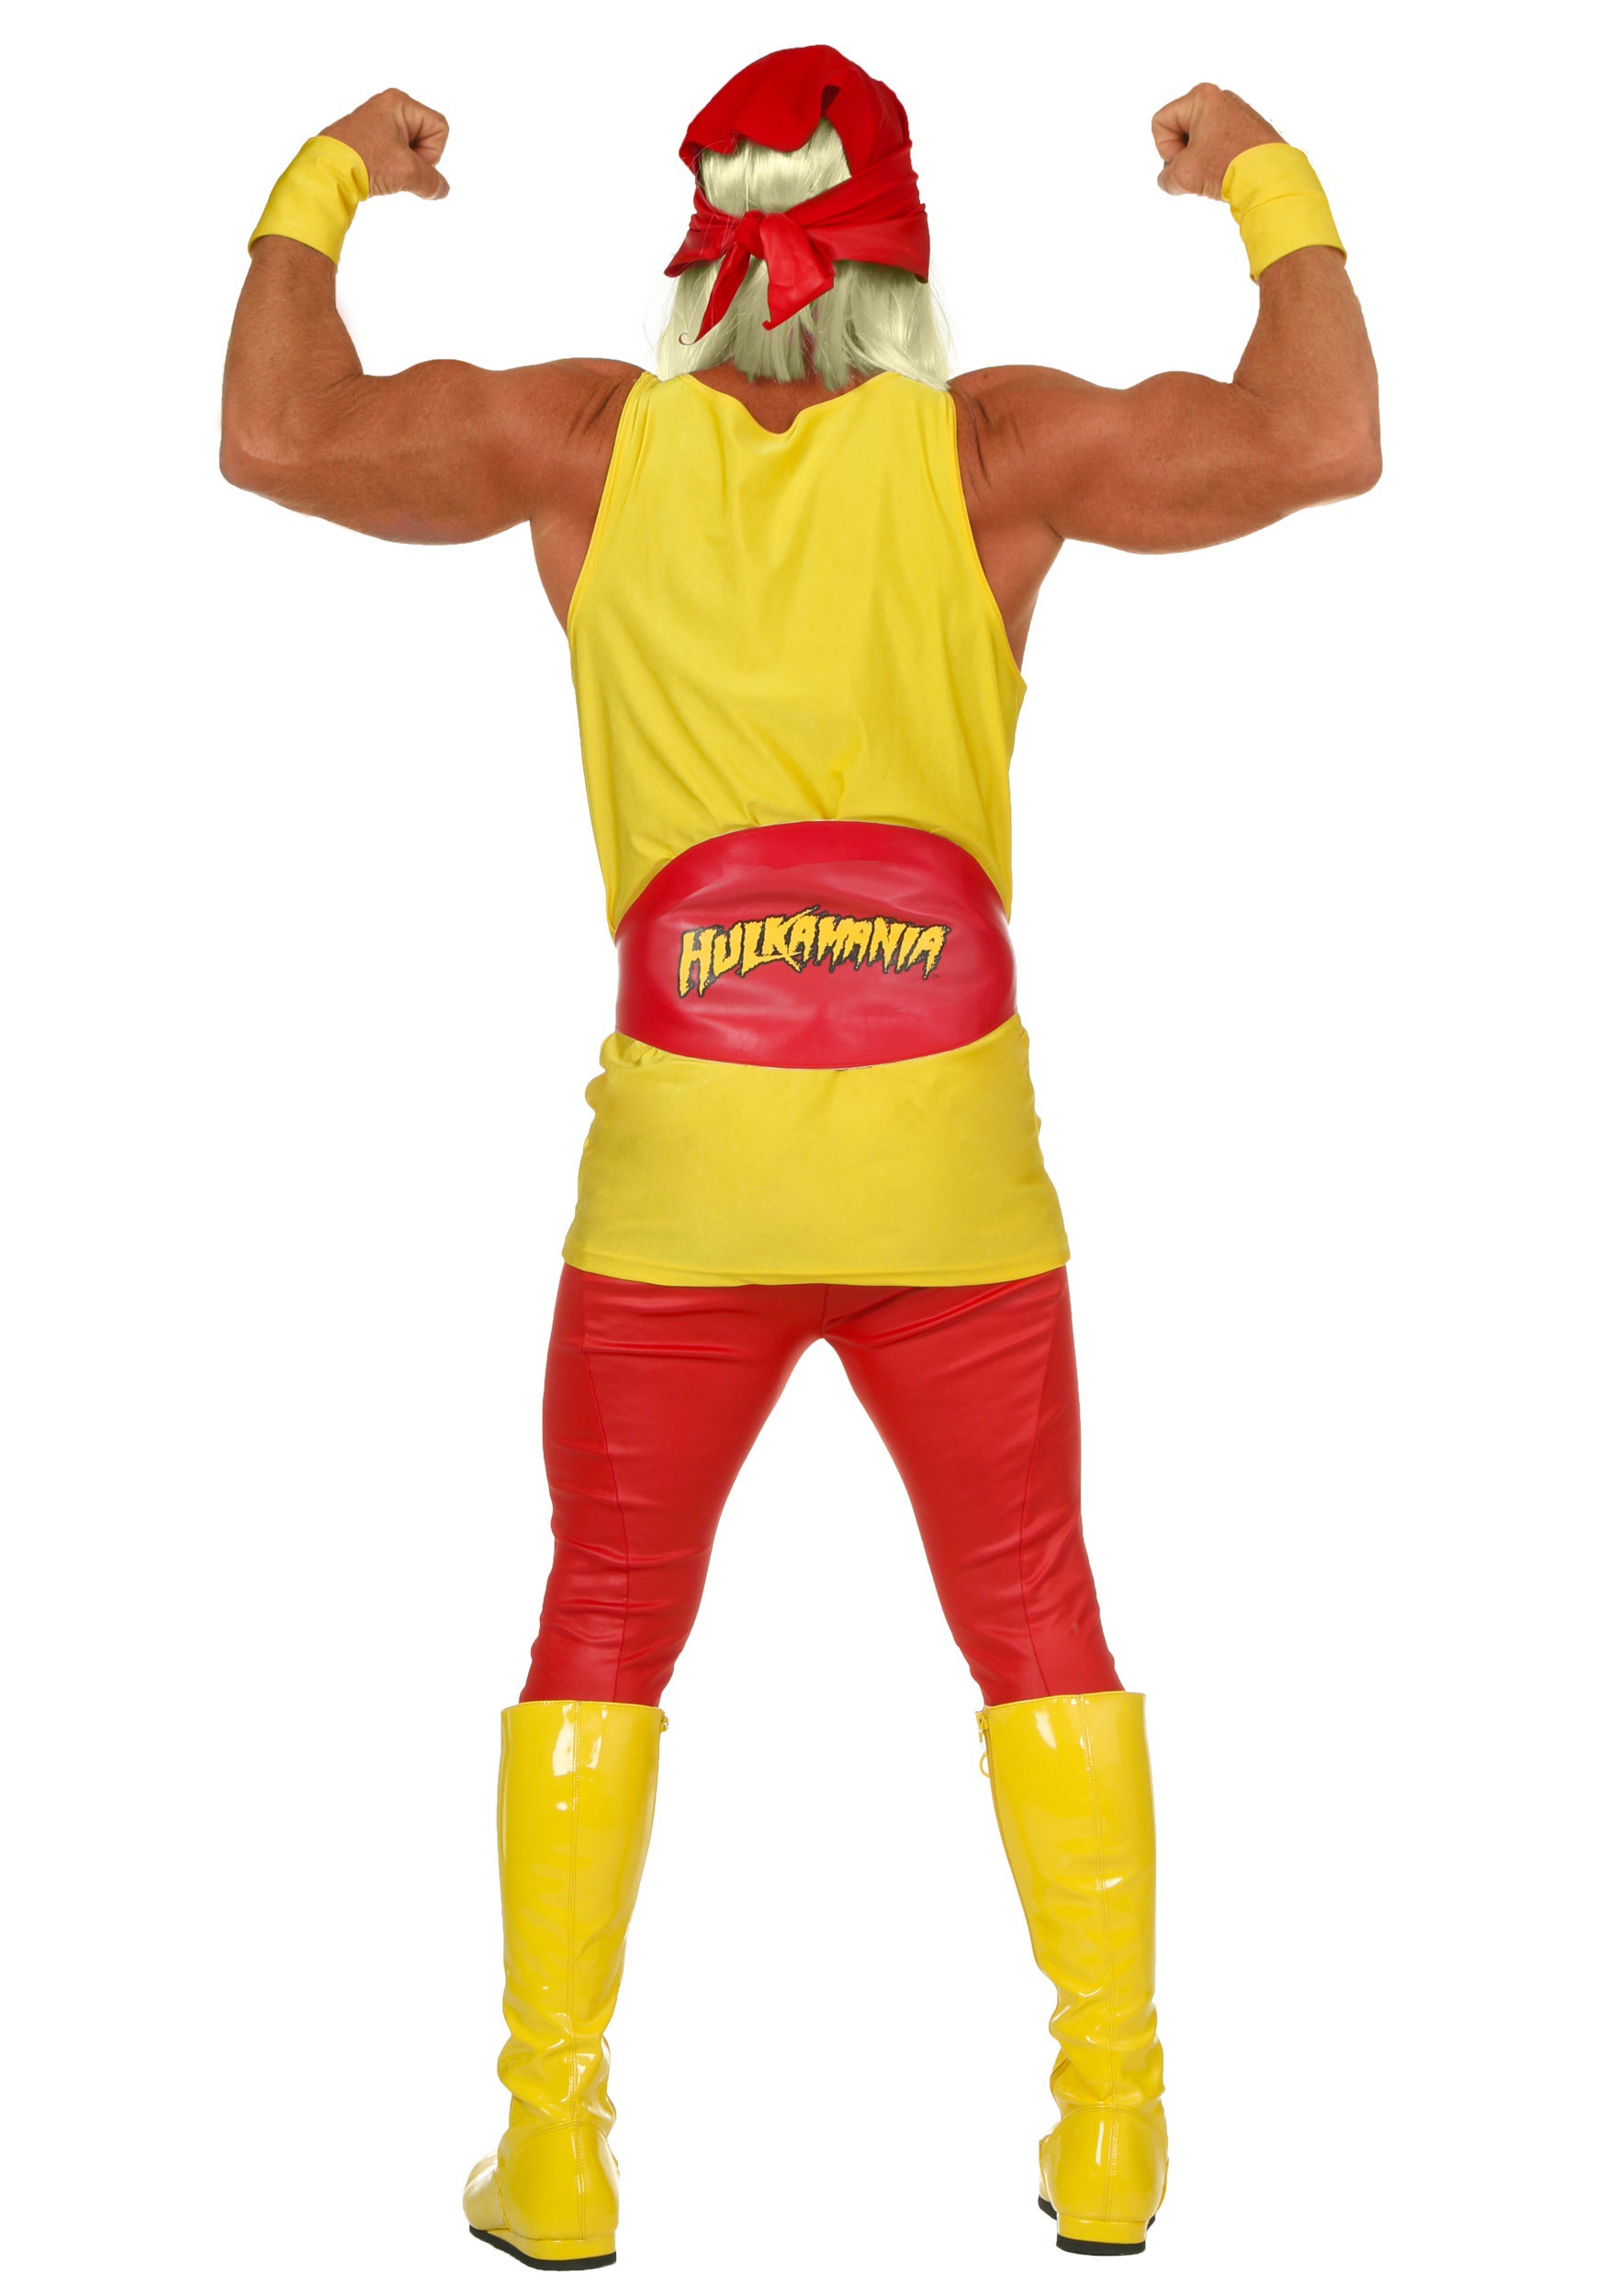 Red Hulk Hogan Hulkamania Bandana Adult Sized New 